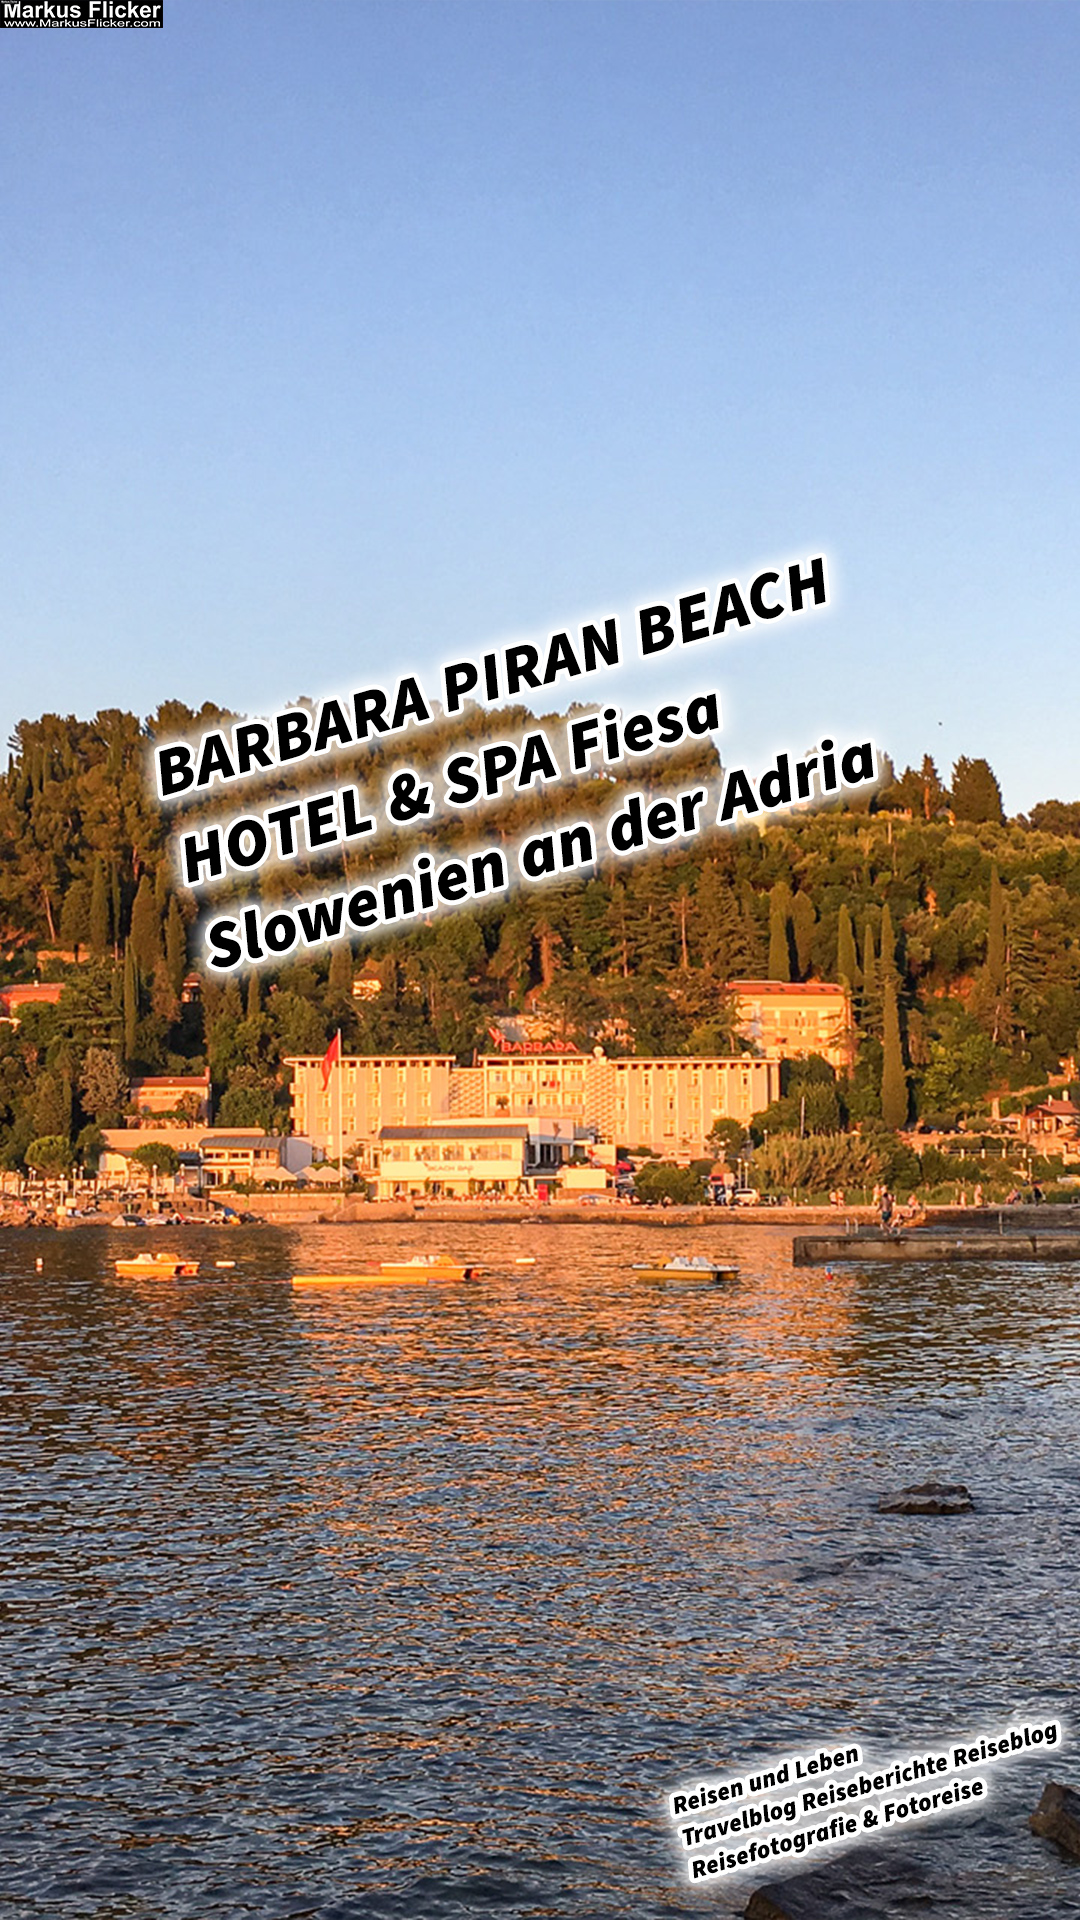 BARBARA PIRAN BEACH HOTEL & SPA Fiesa Slowenien an der Adria #ifeelsLOVEnia #visitslovenia